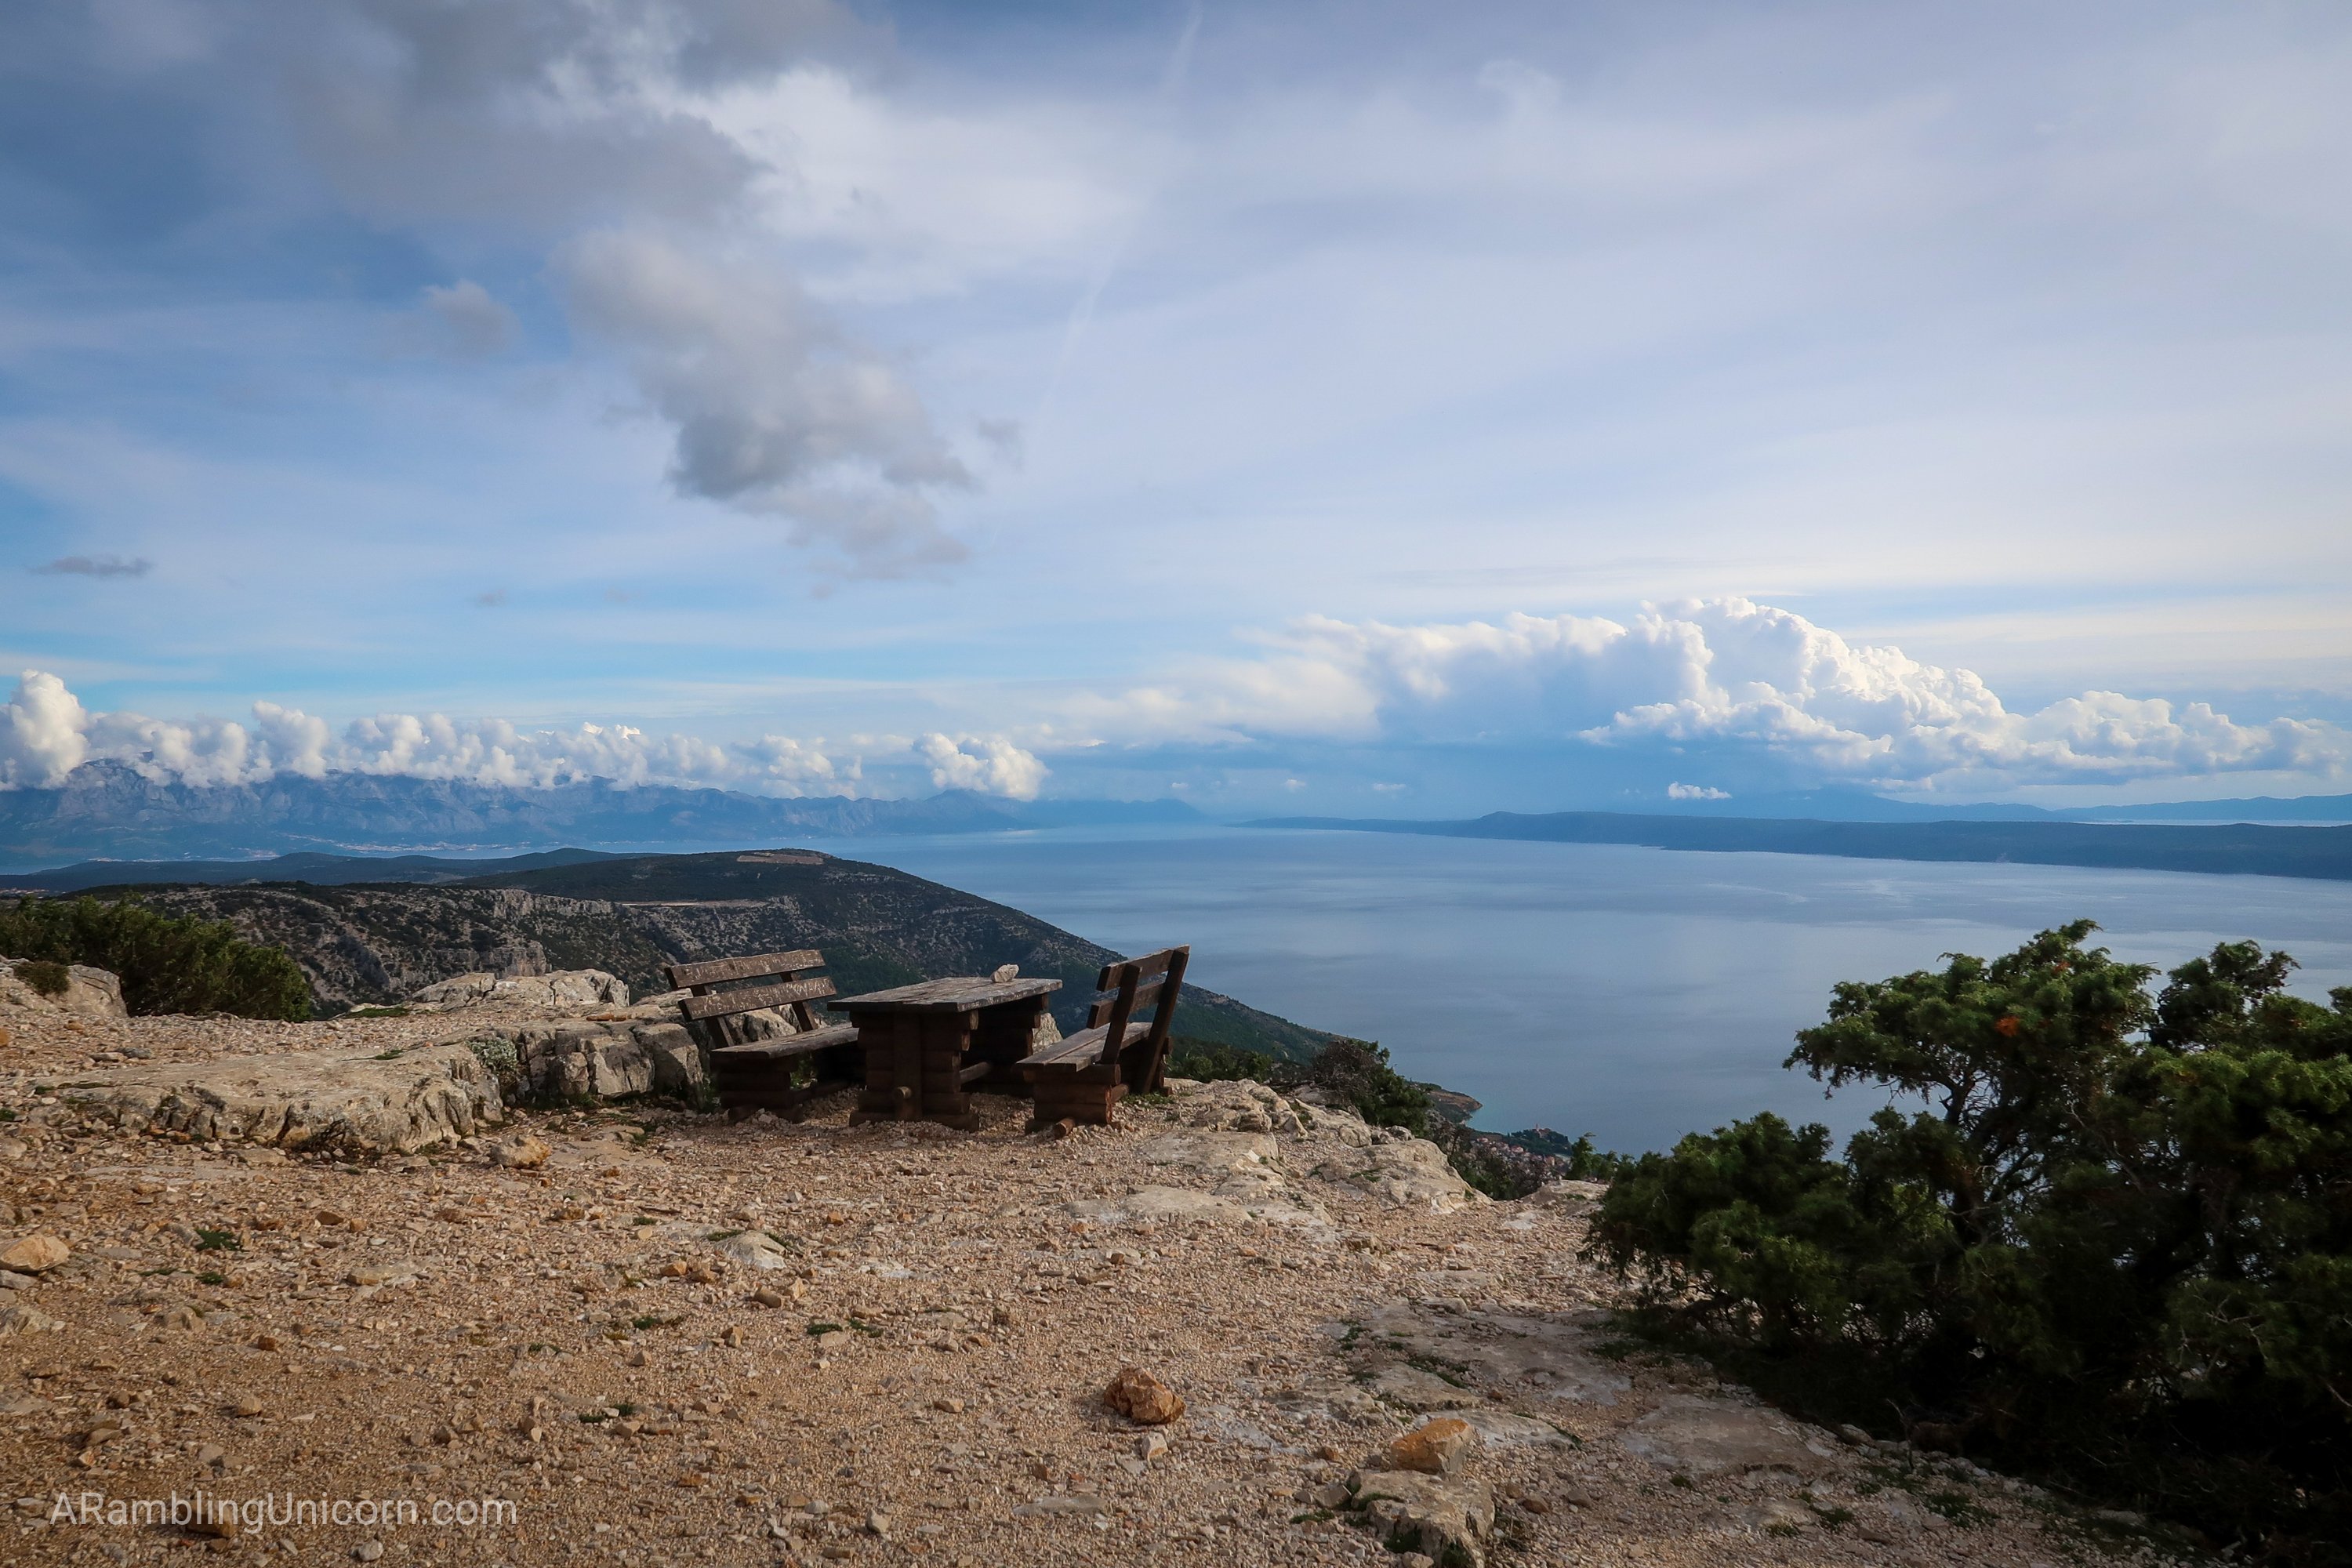 Vidova Gora Trail: Hiking the Tallest Mountain in the Adriatic